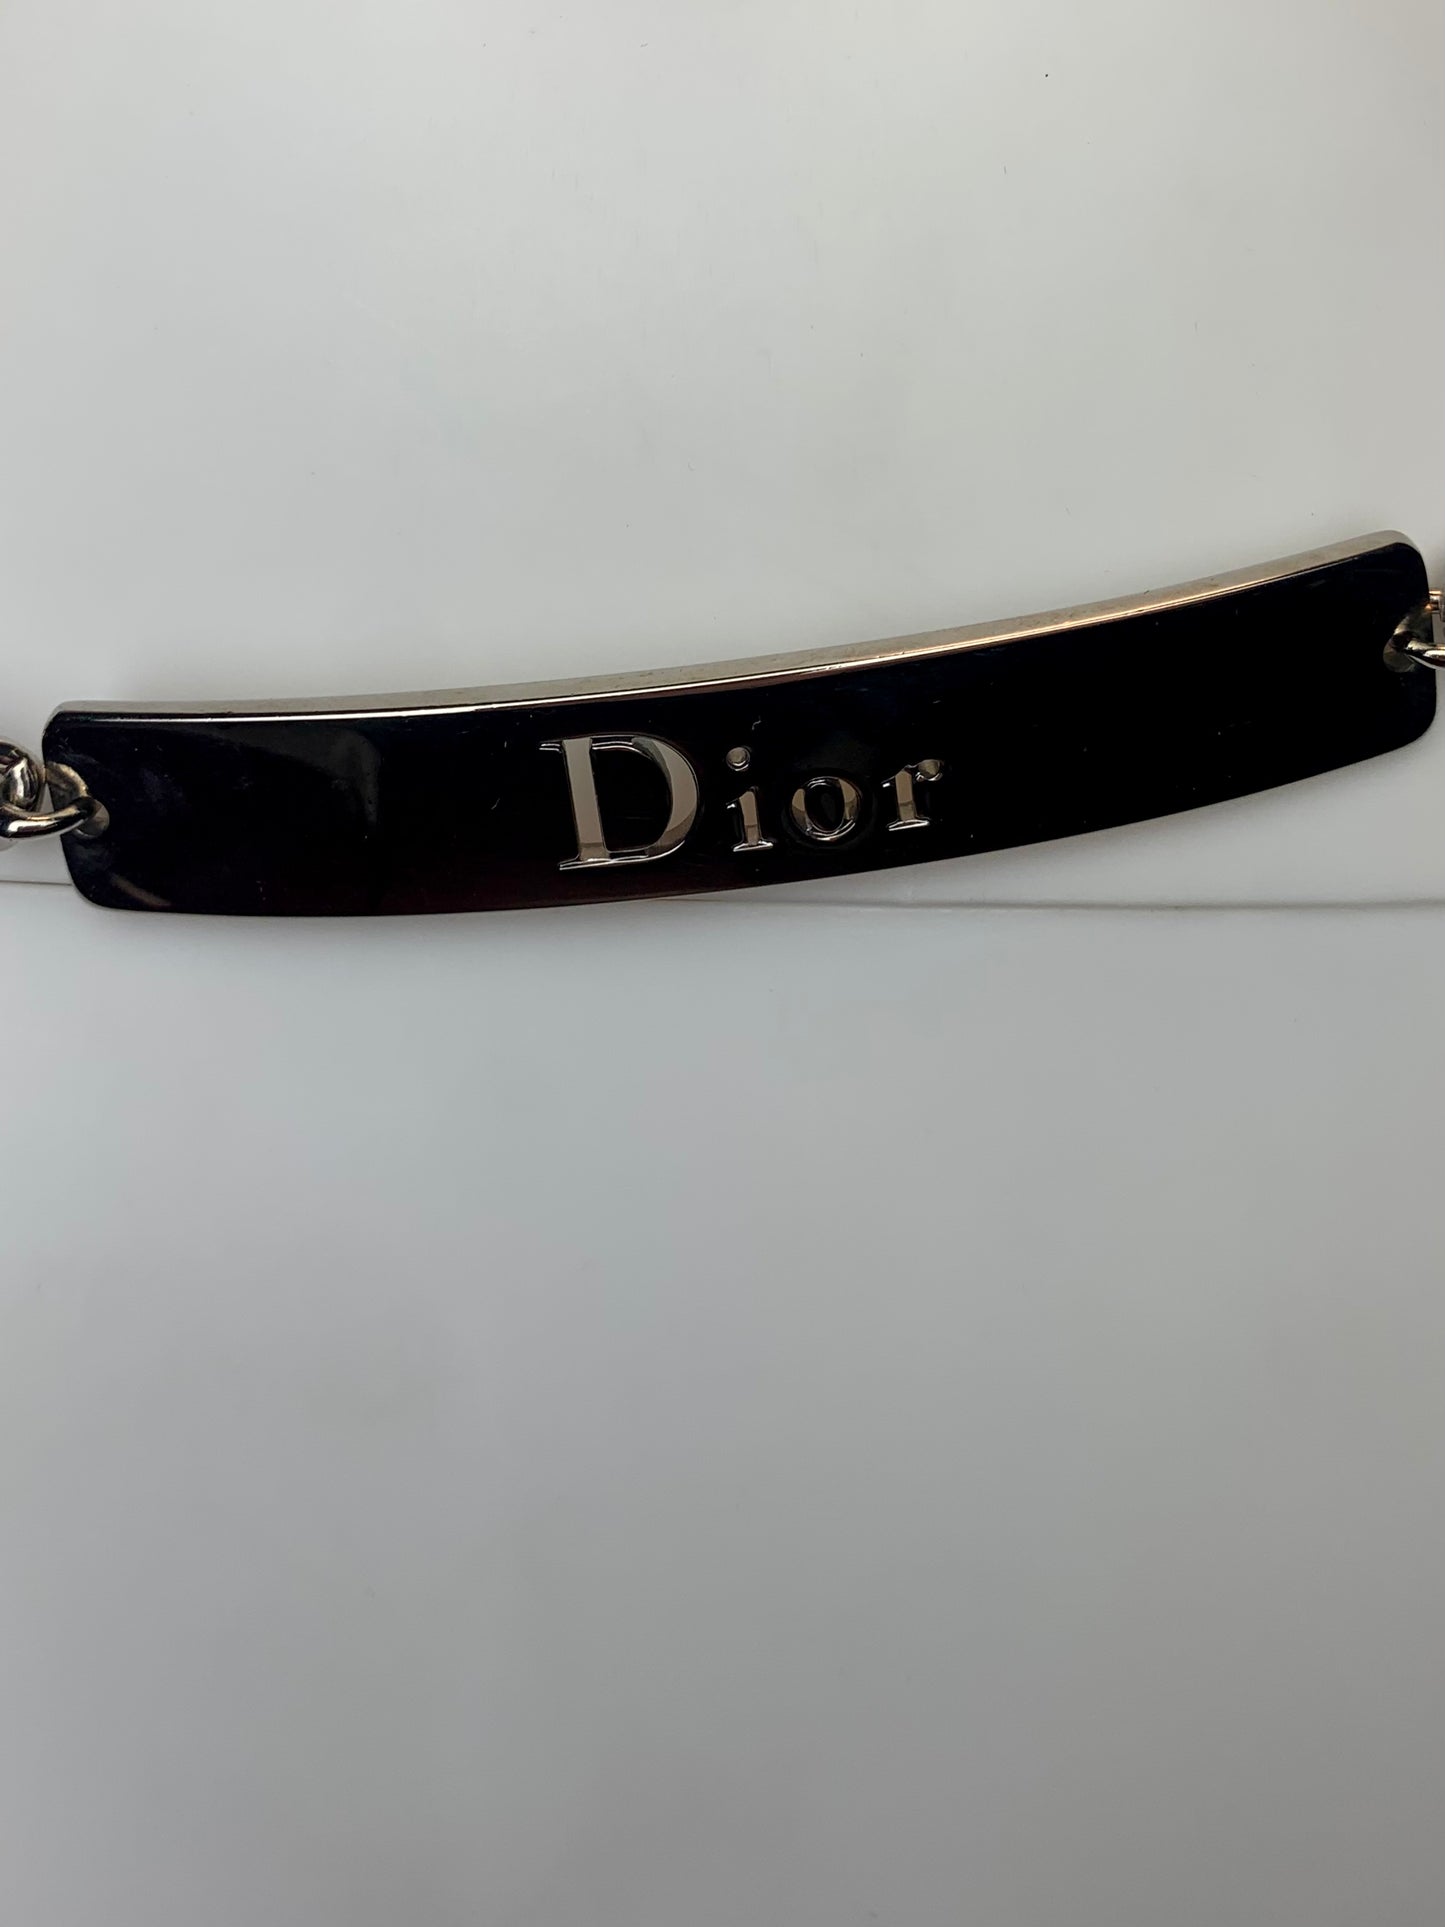 Dior by John Galliano SS 2003 Belt